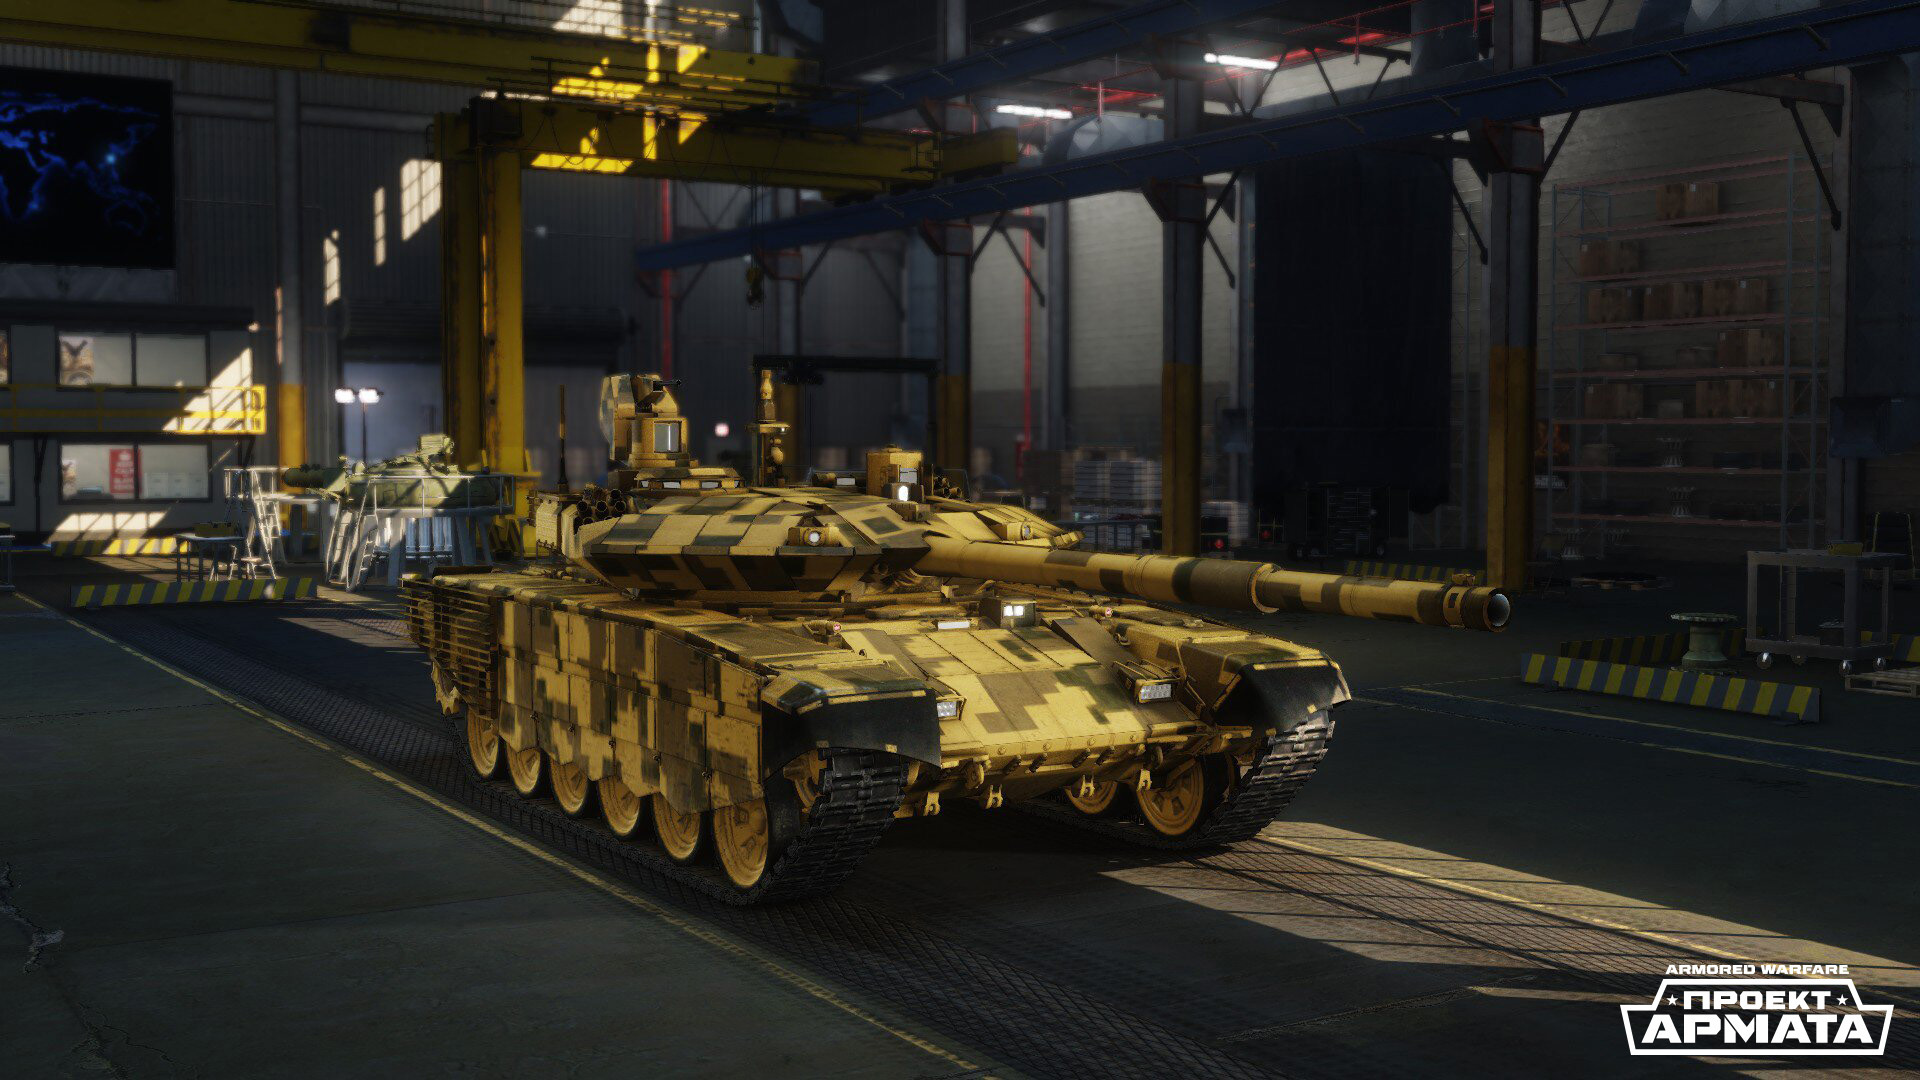 Проект армата официальная игра. Armored Warfare: Армата. Армор варфаер проект Армата. Армата танк игра. Т-14 Армата в играх.